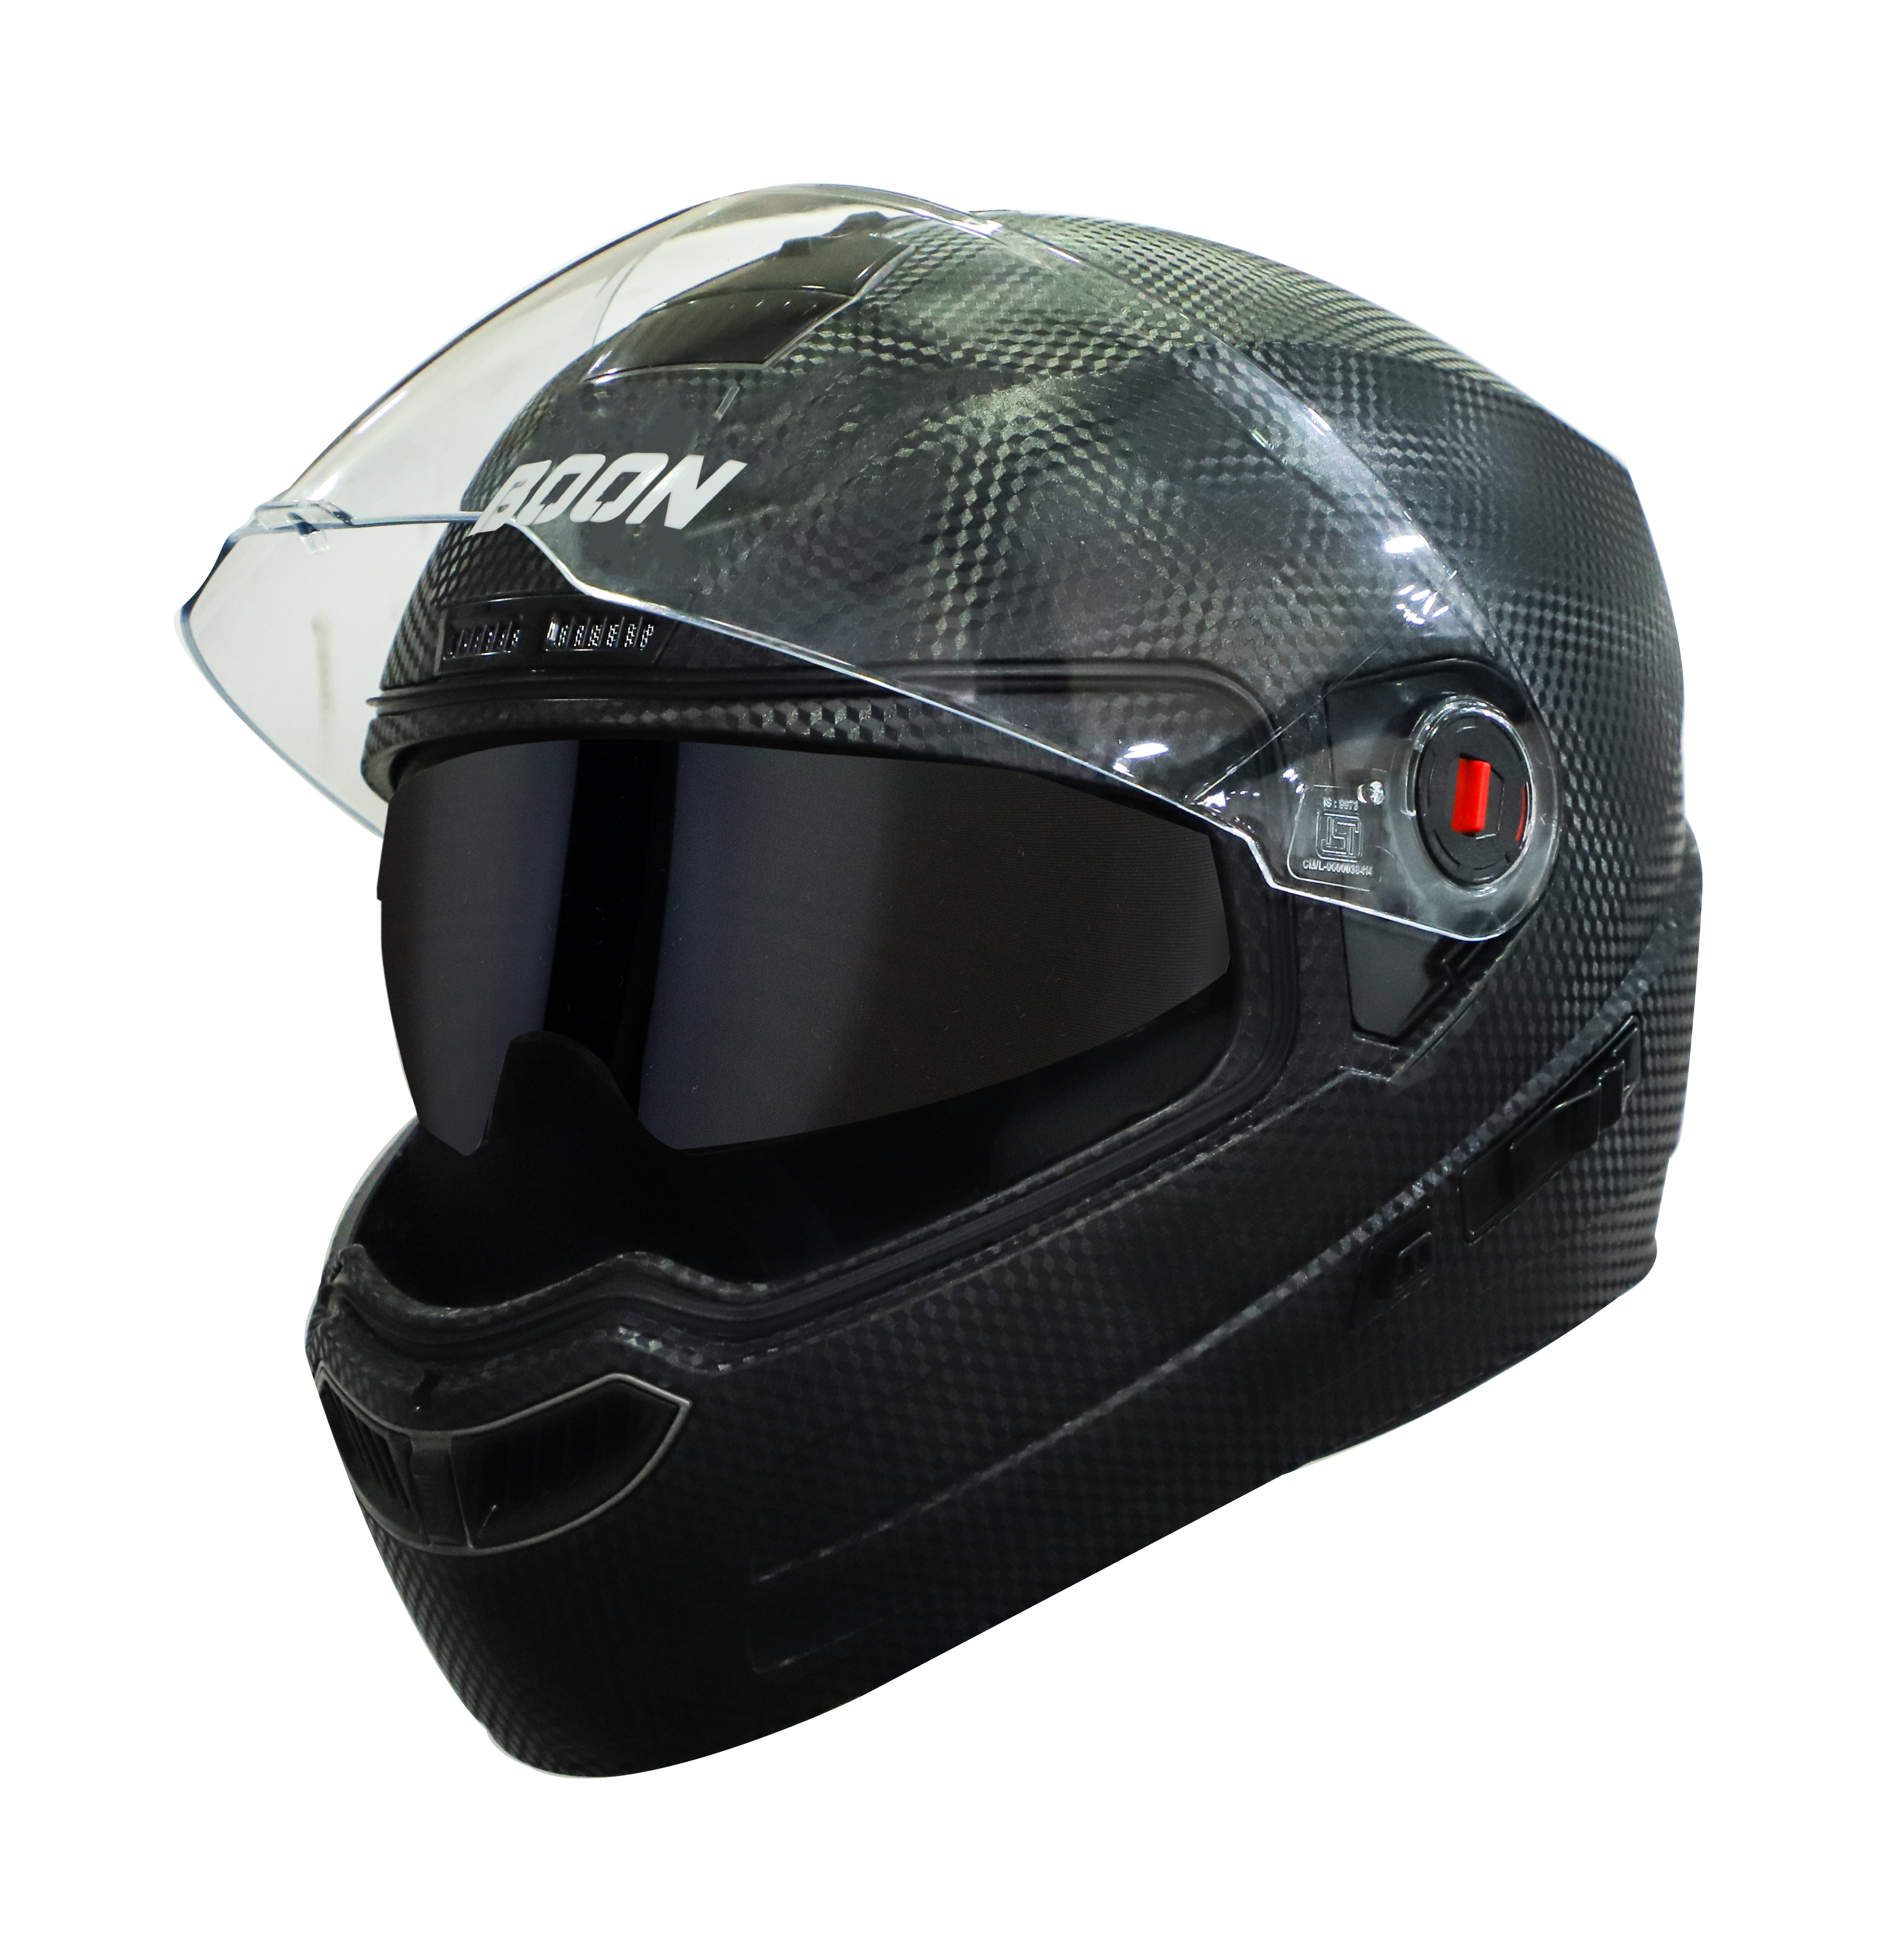 Steelbird SBA-1 Boon Dashing ISI Certified Full Face Helmet For Men And Women With Inner Smoke Sun Shield (Dashing Black)